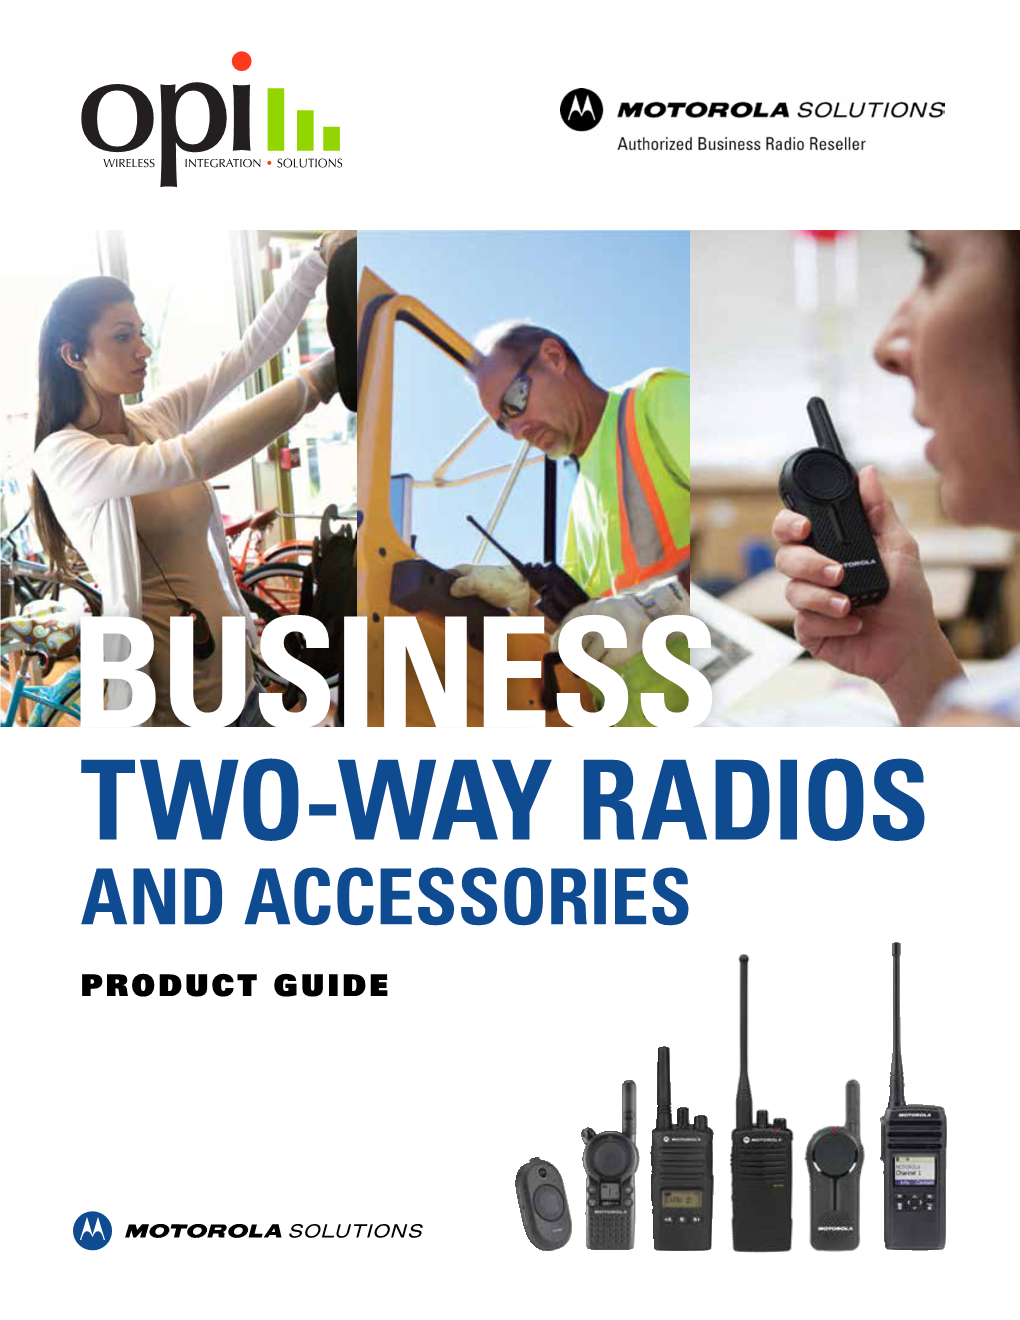 Motorola Radio & Accessories Product Guide